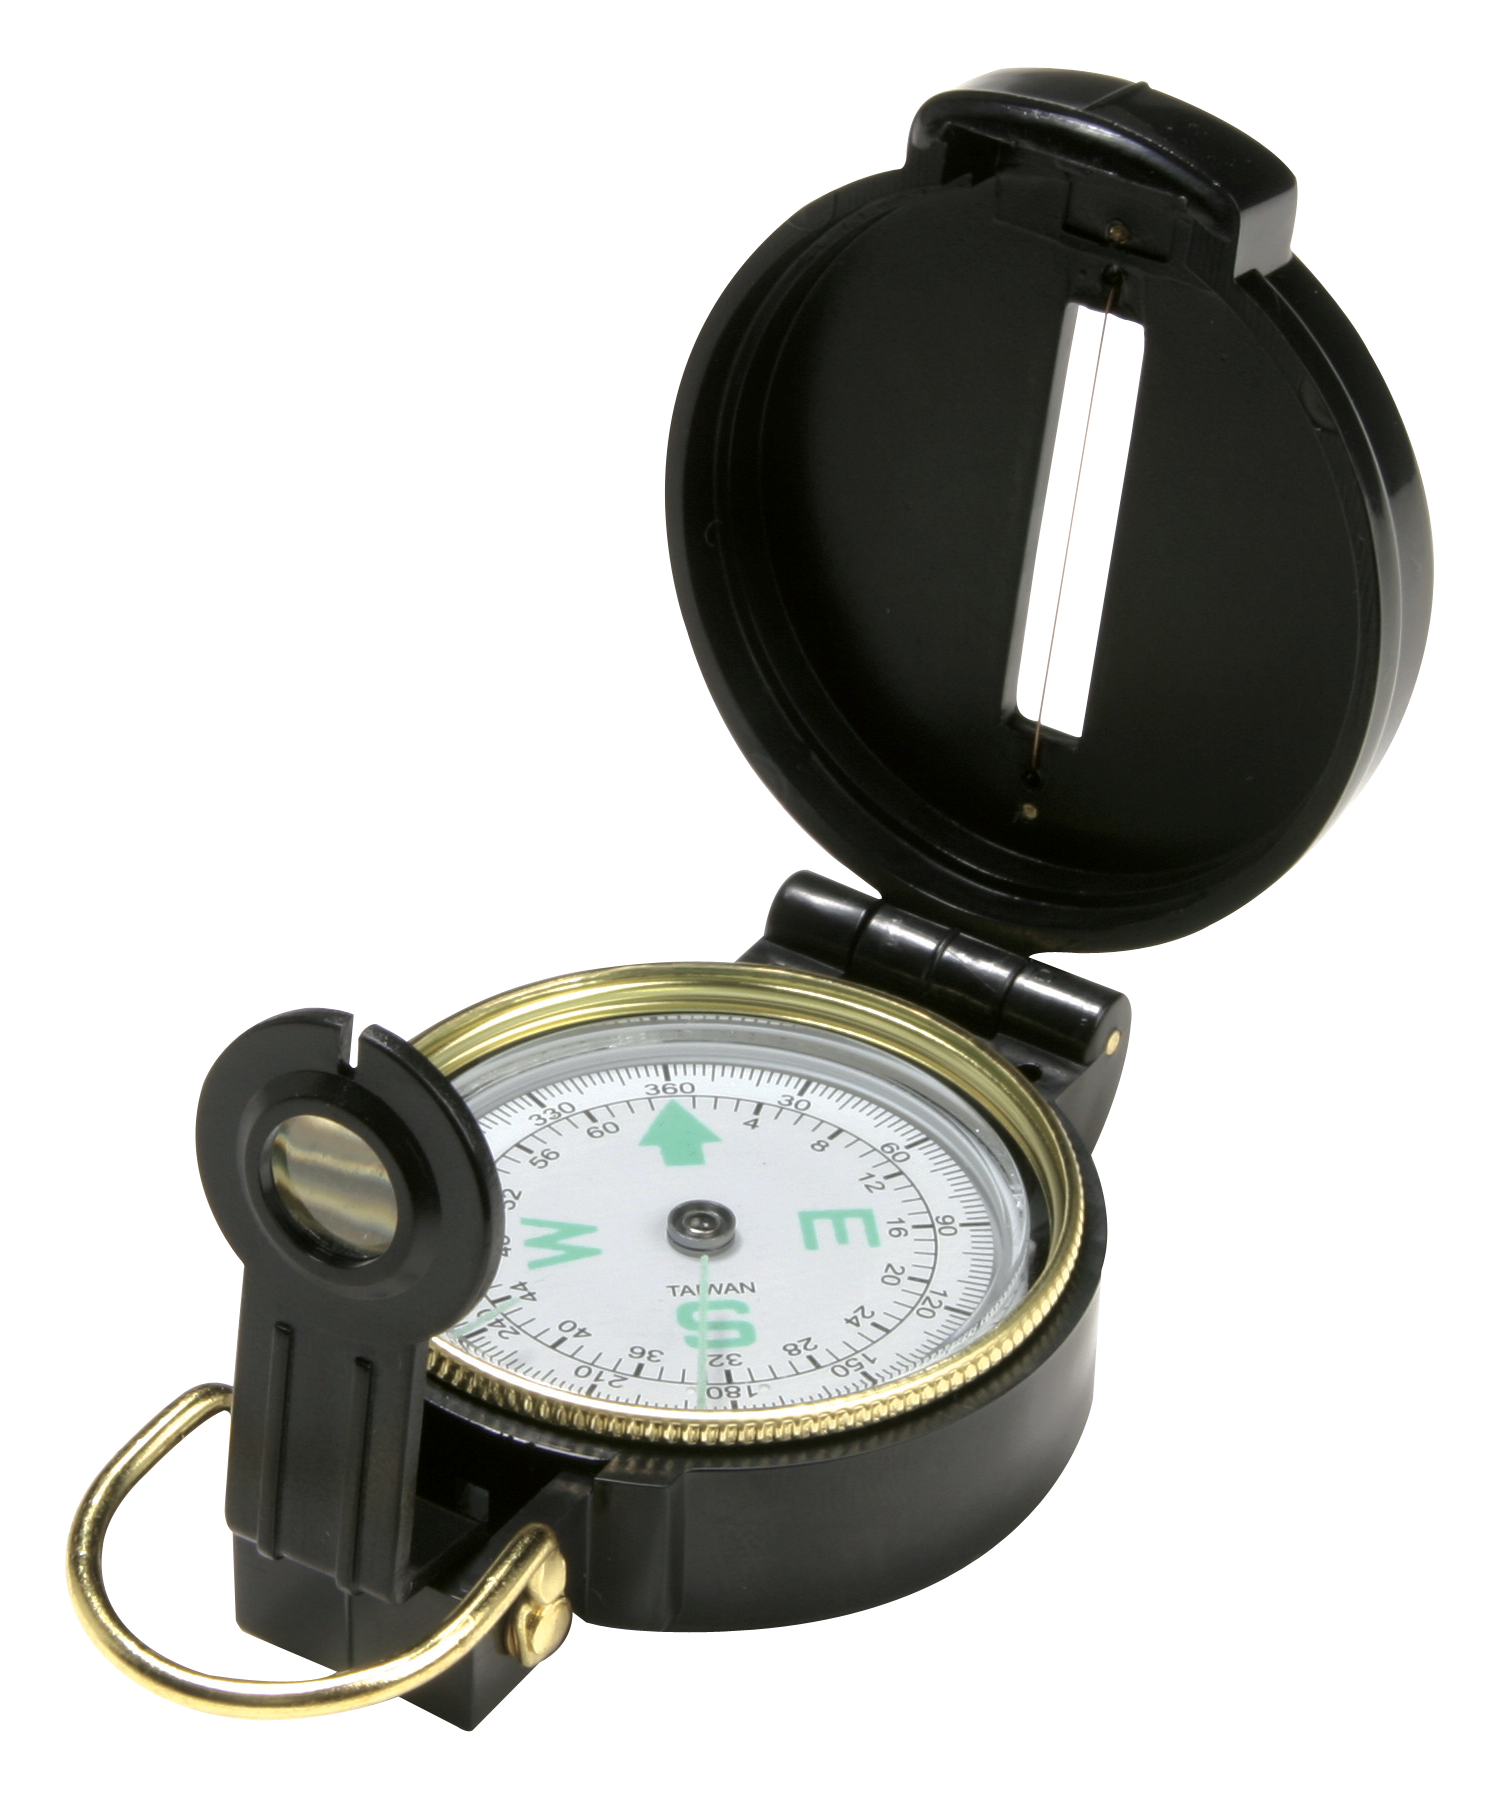 Coghlan's Lensatic Compass